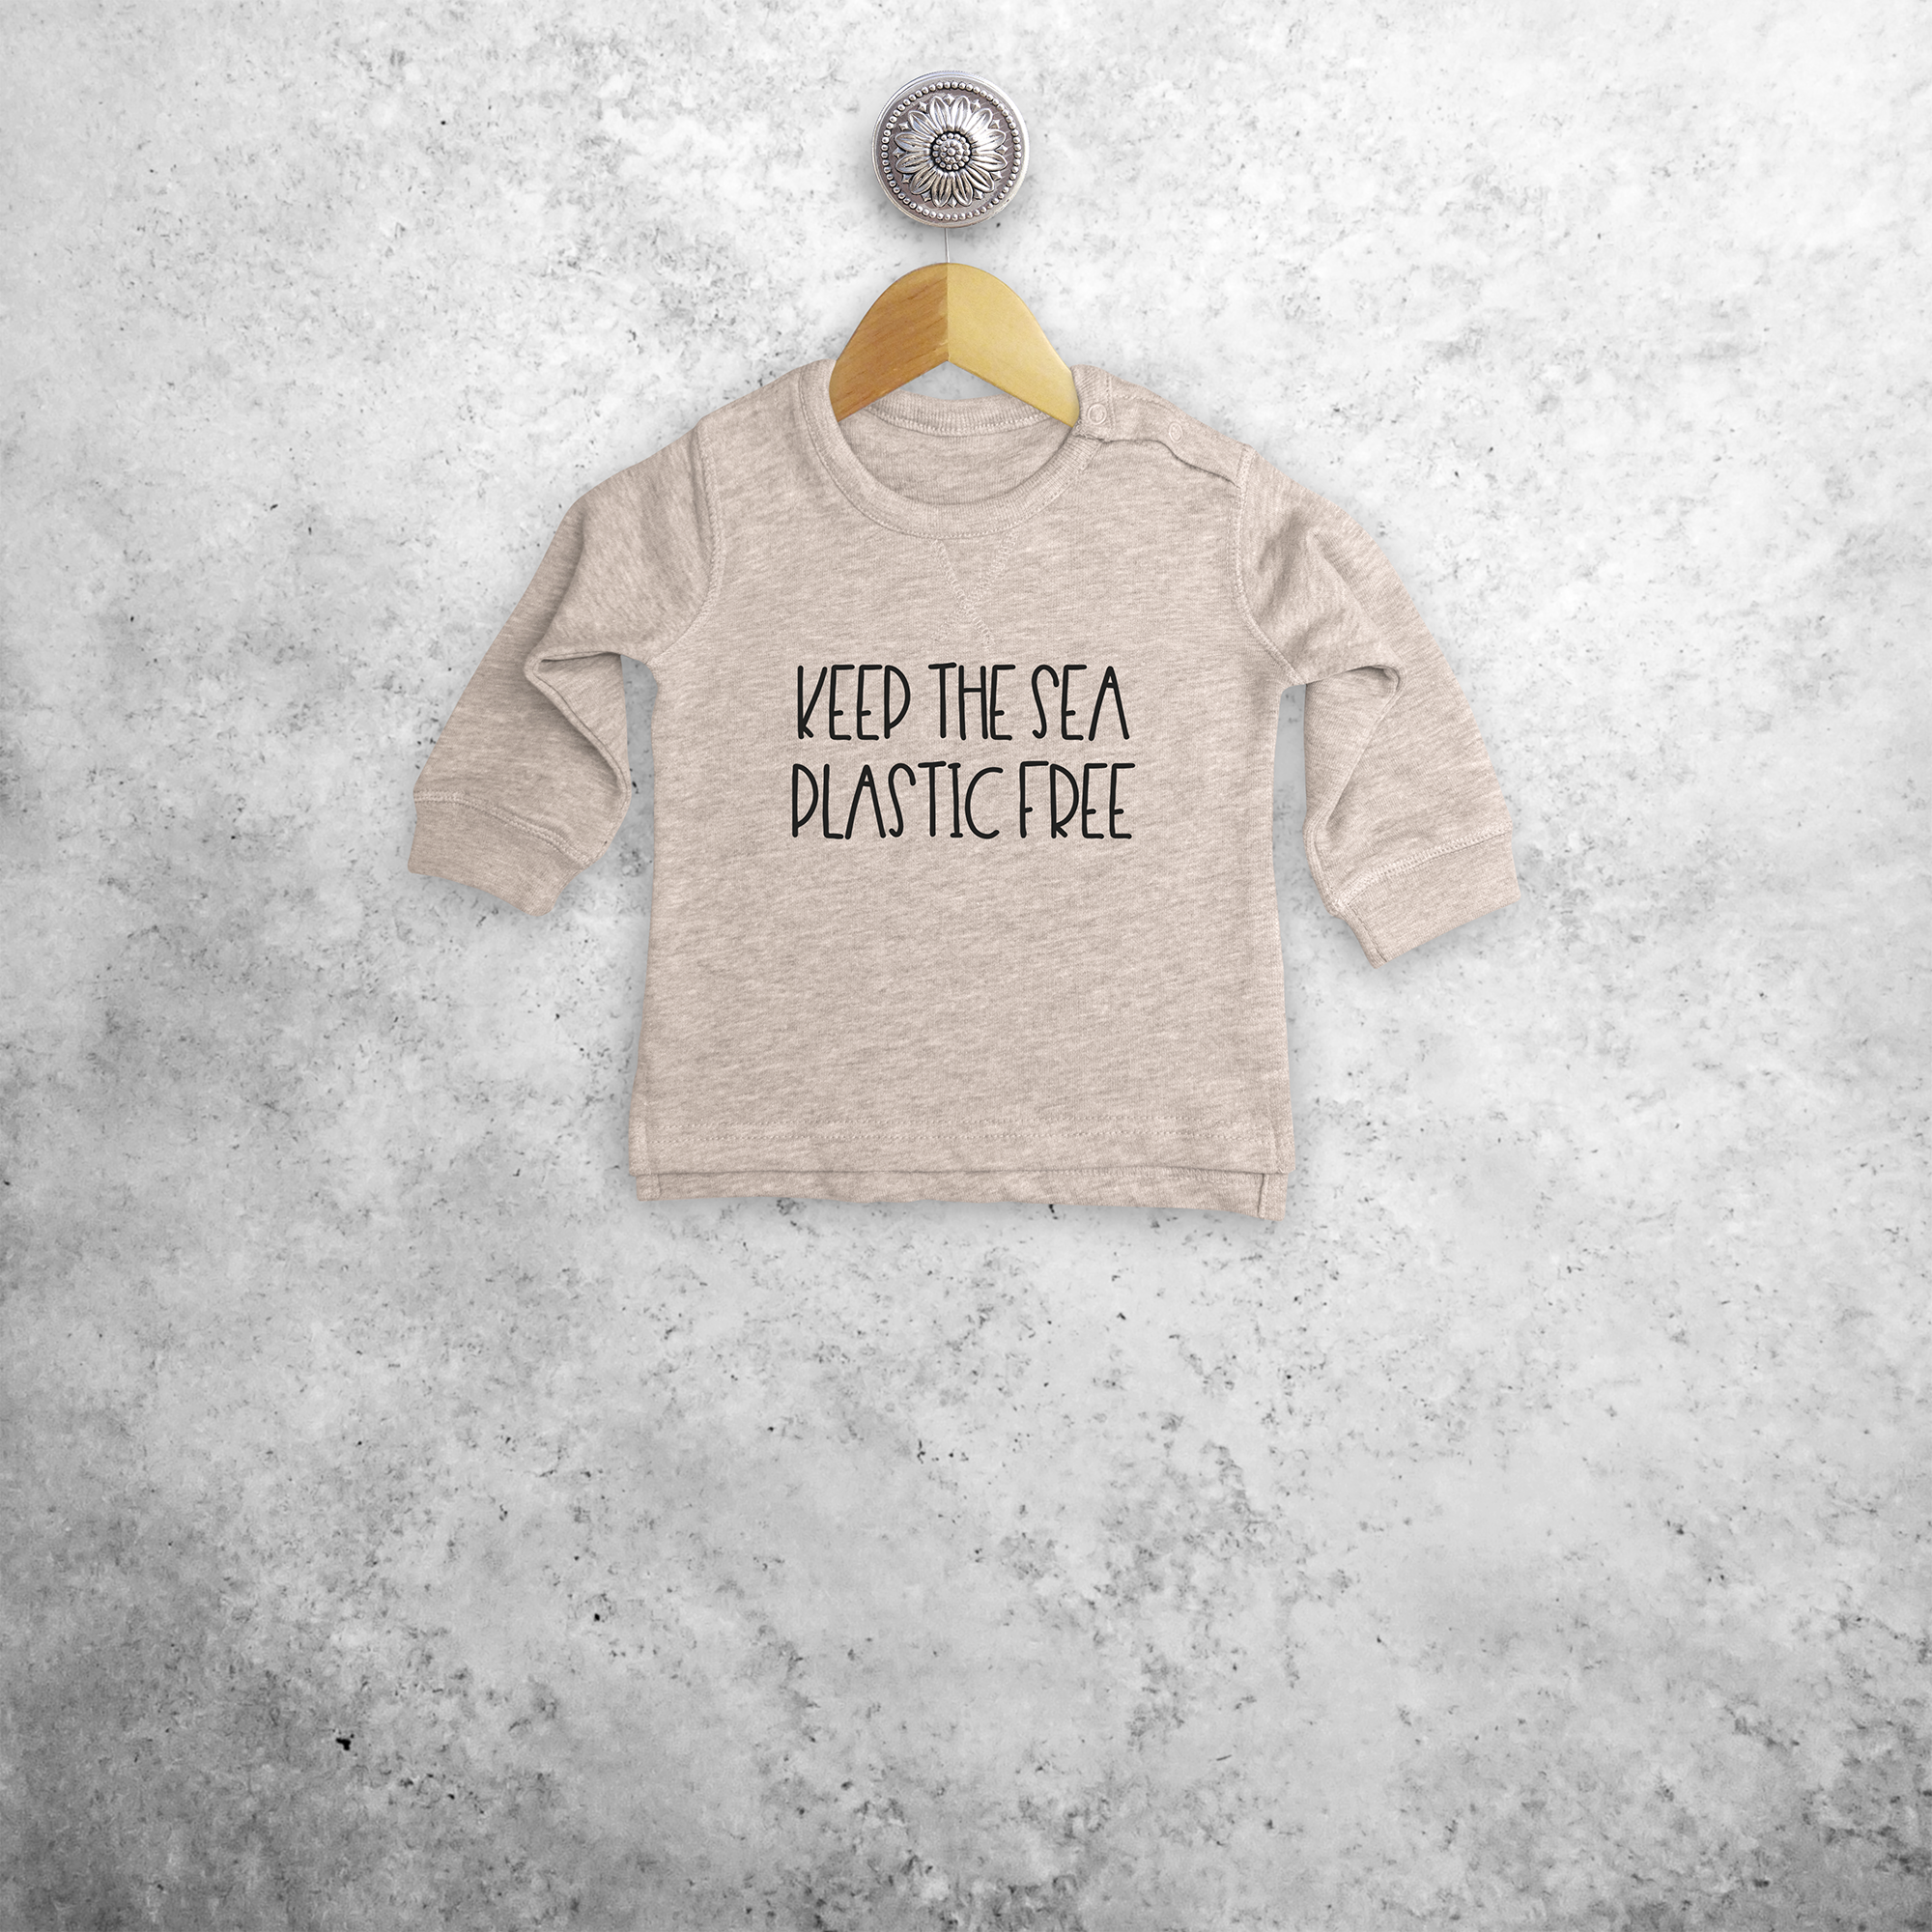 'Keep the sea plastic free' baby sweater